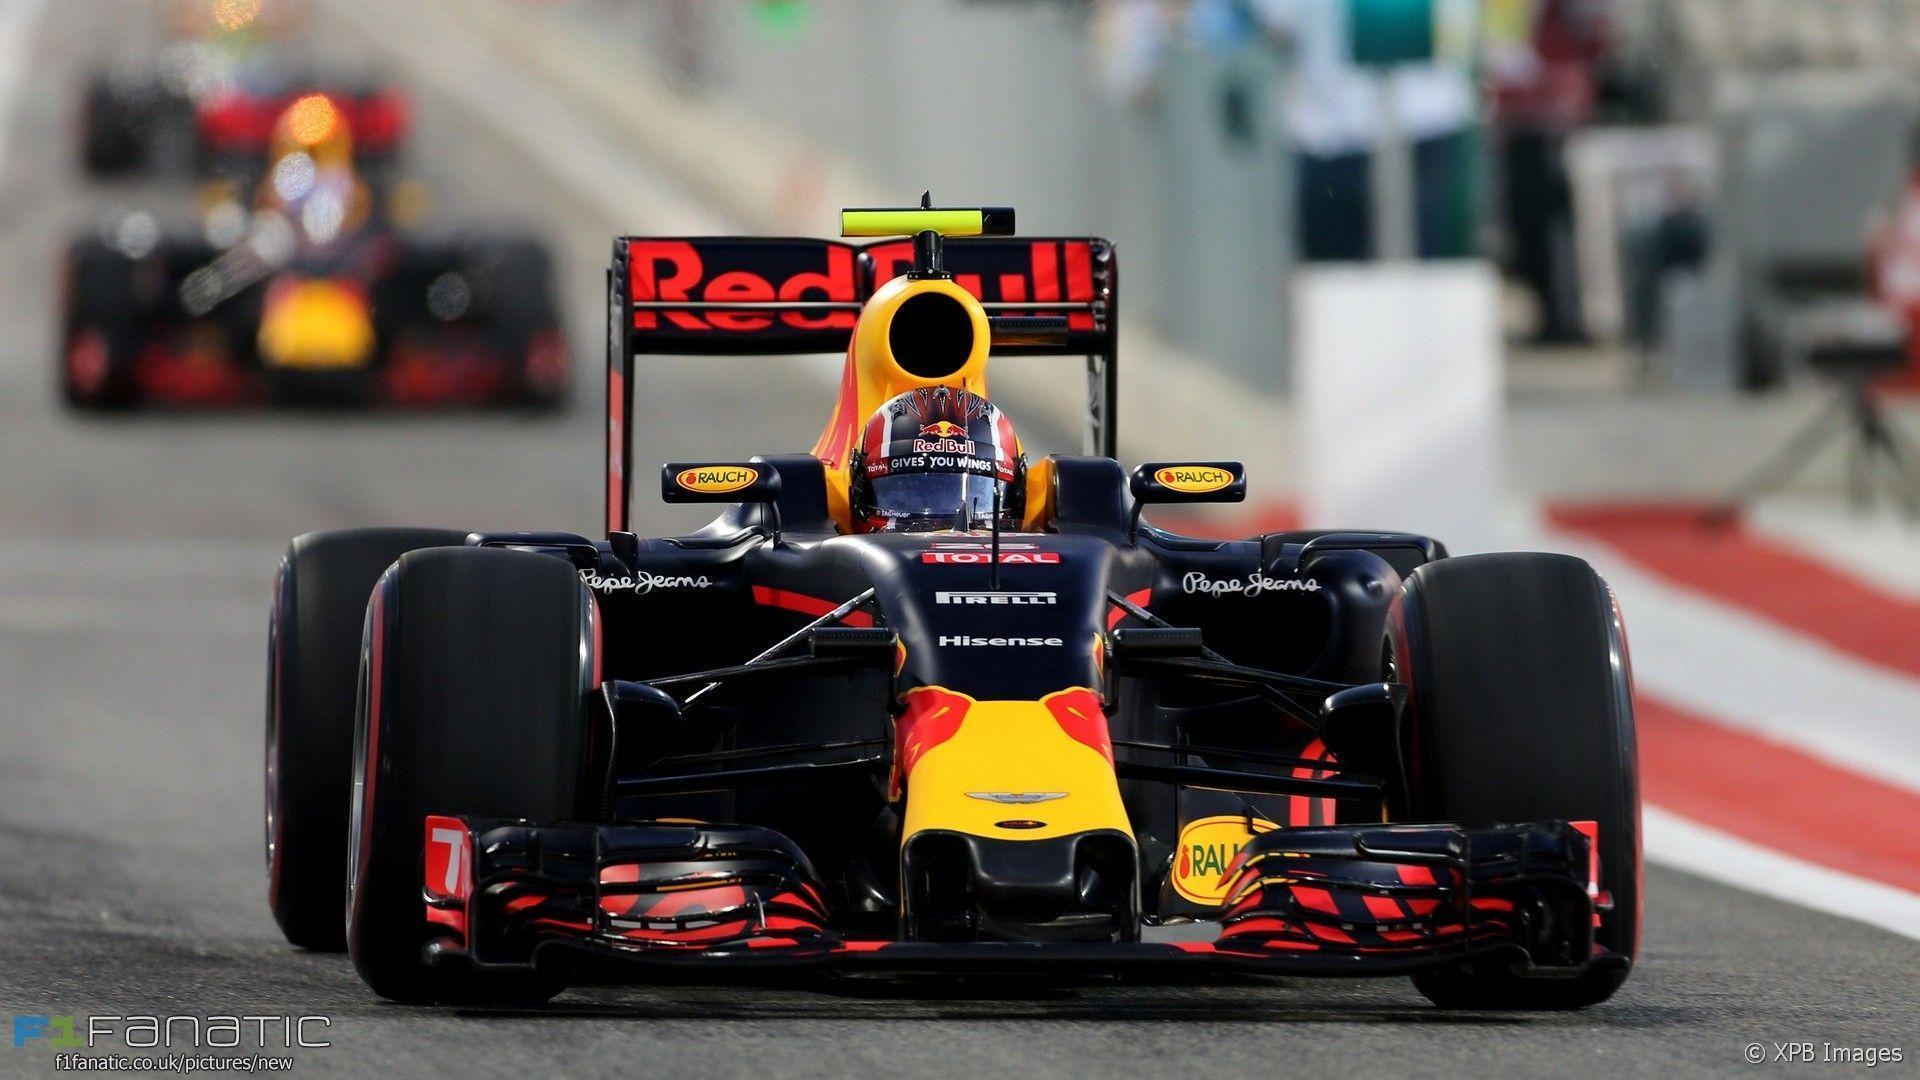 Daniil Kvyat, Red Bull, Bahrain International Circuit, 2016 · F1